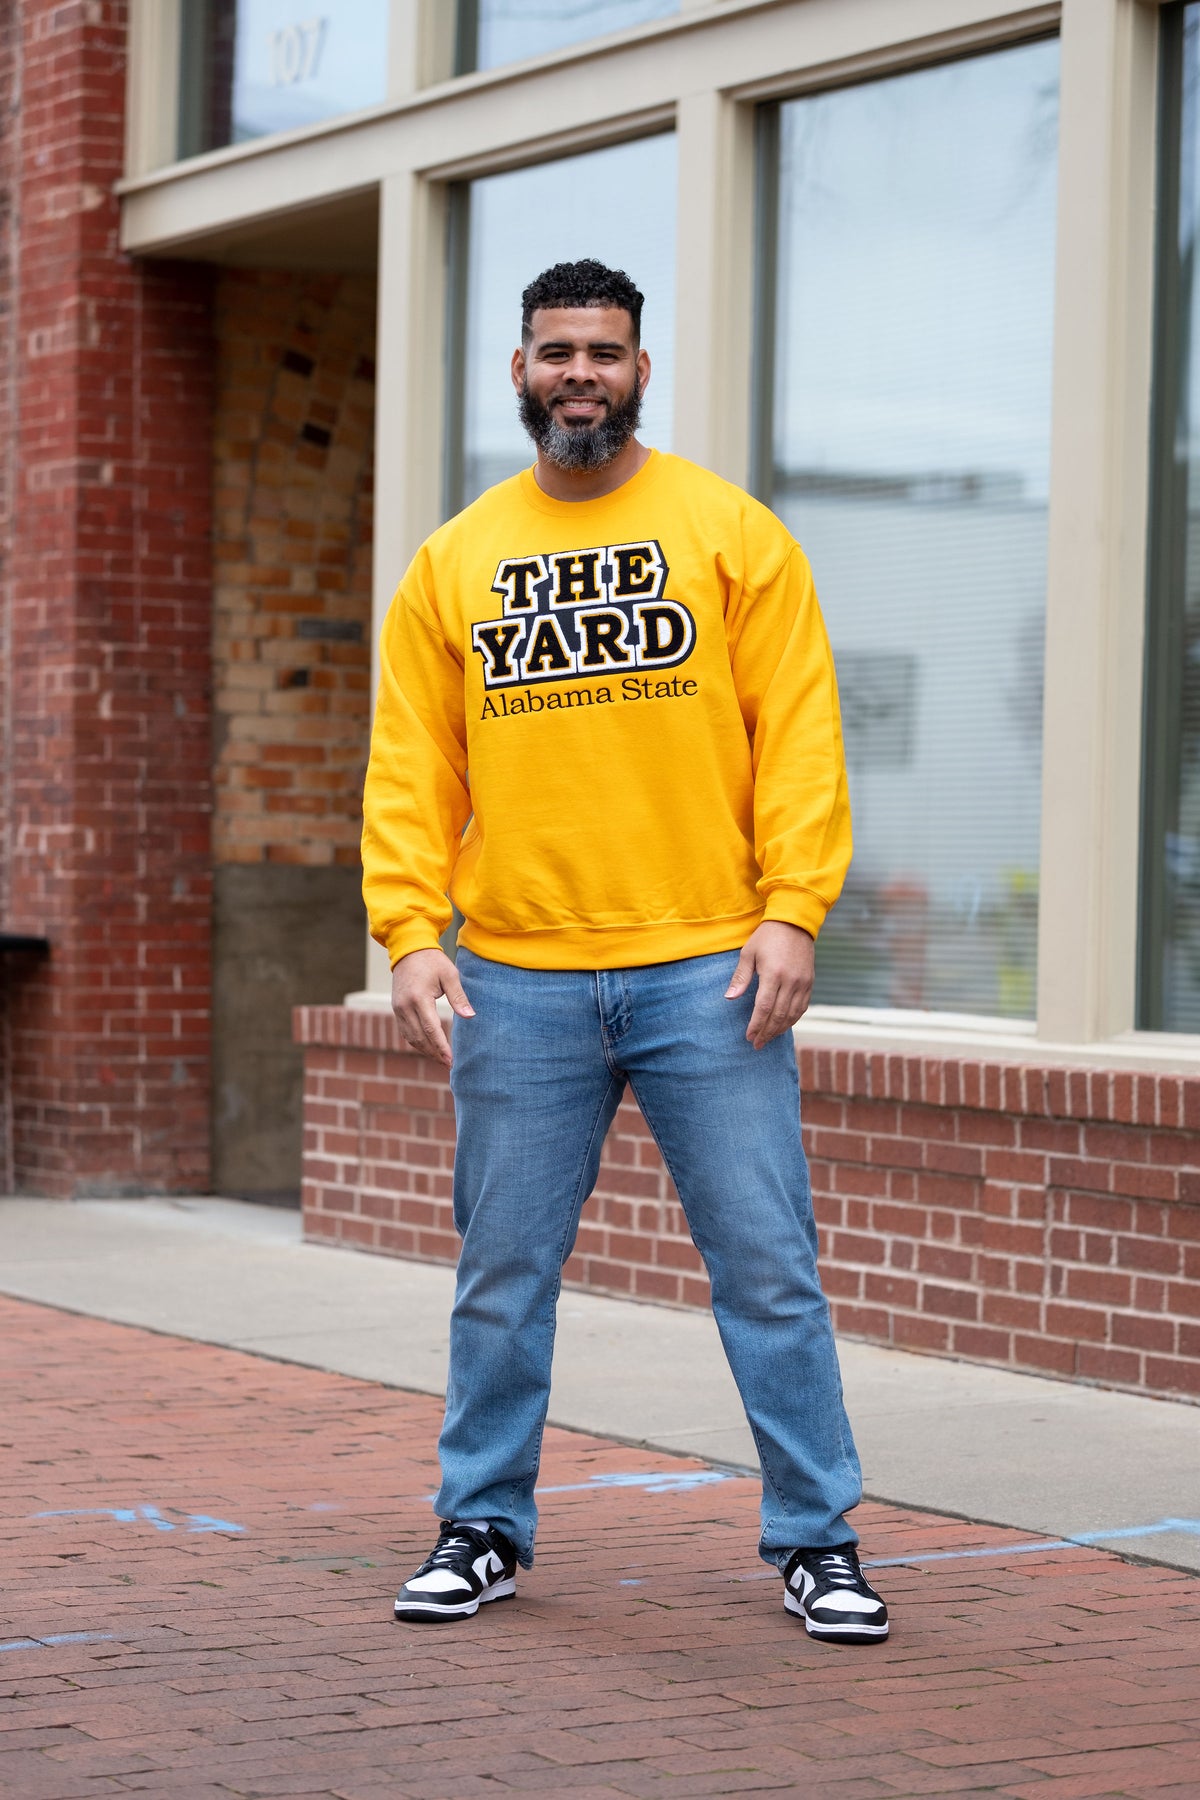 Alabama State, "The Yard" Gold Sweatshirt (Unisex)